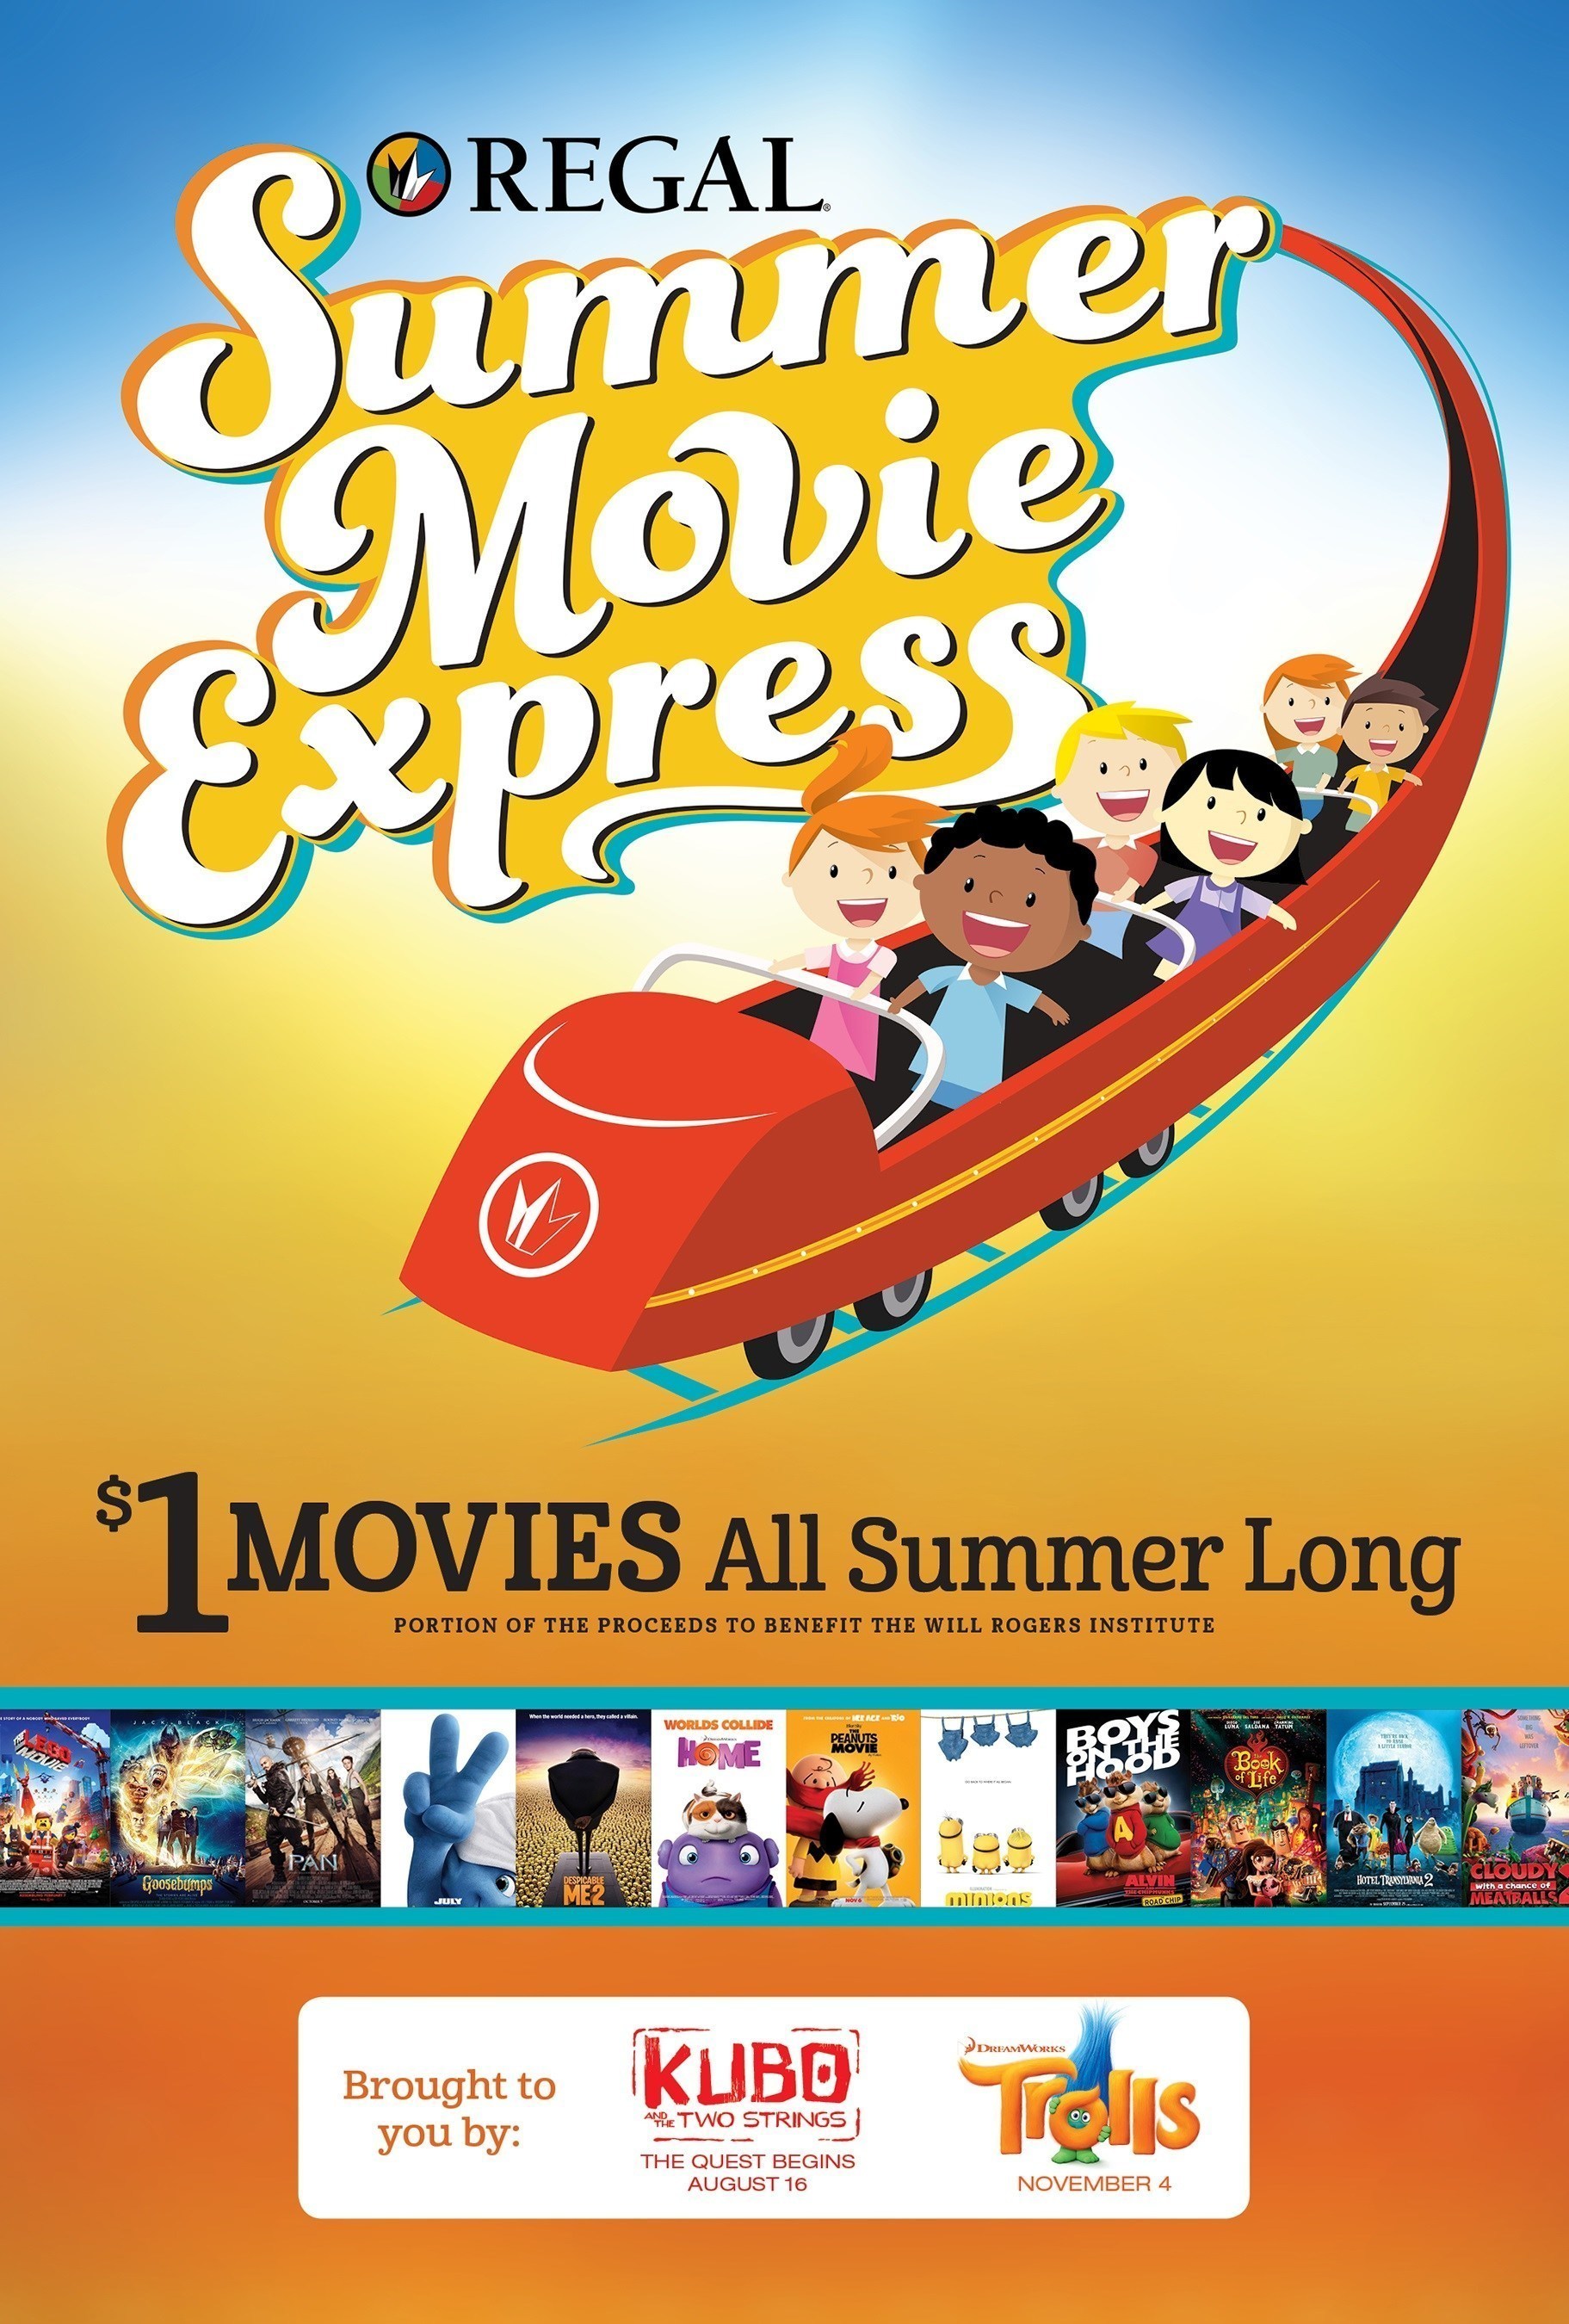 Regal Entertainment Group announces $1 movies for 2016 Summer Movie Express Image Source: Regal Entertainment Group